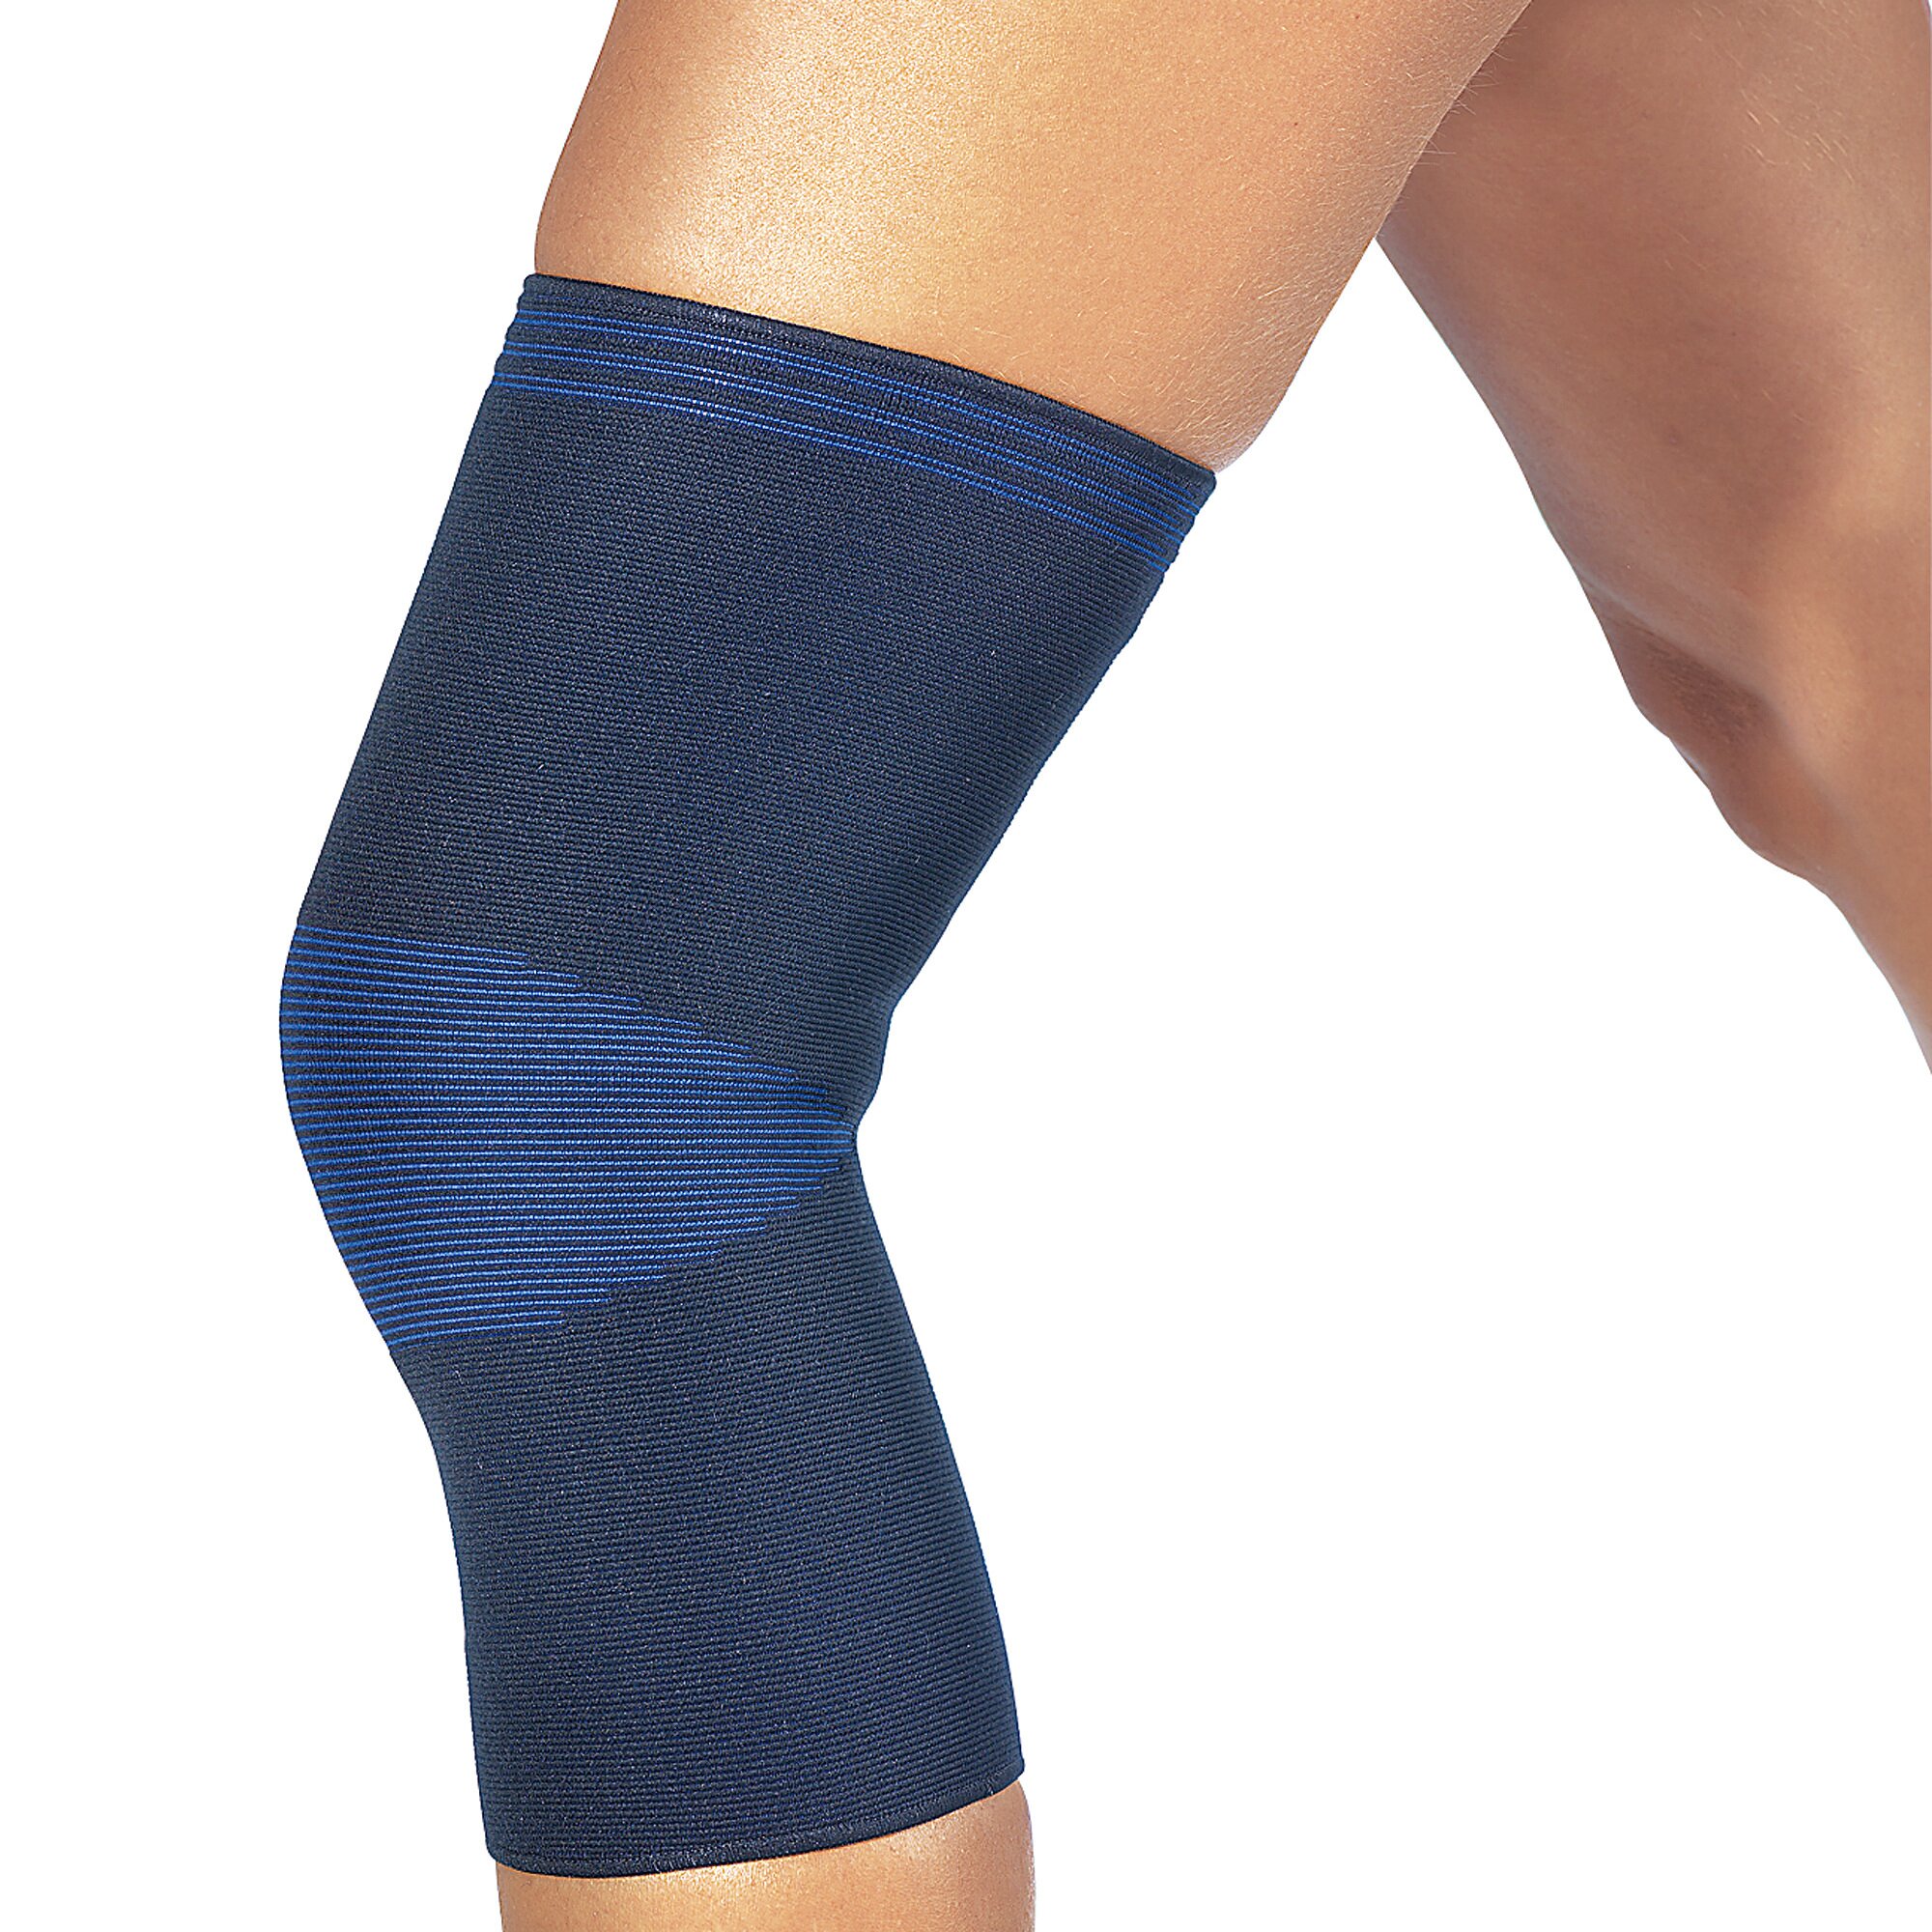 Bandage actif pour genou